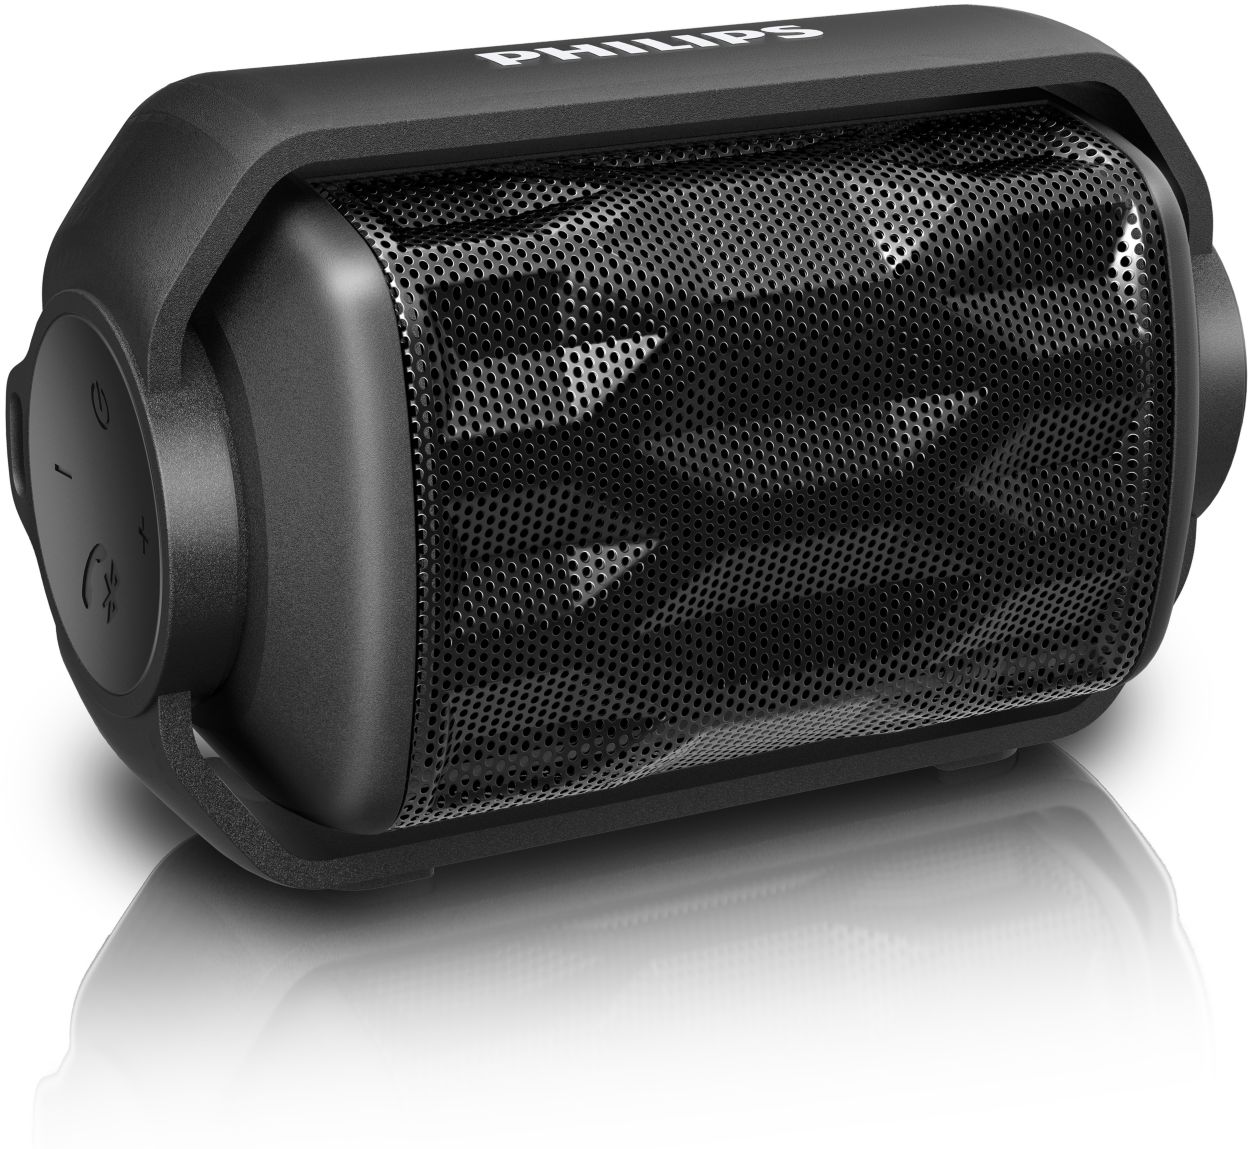 philips portable bluetooth speaker